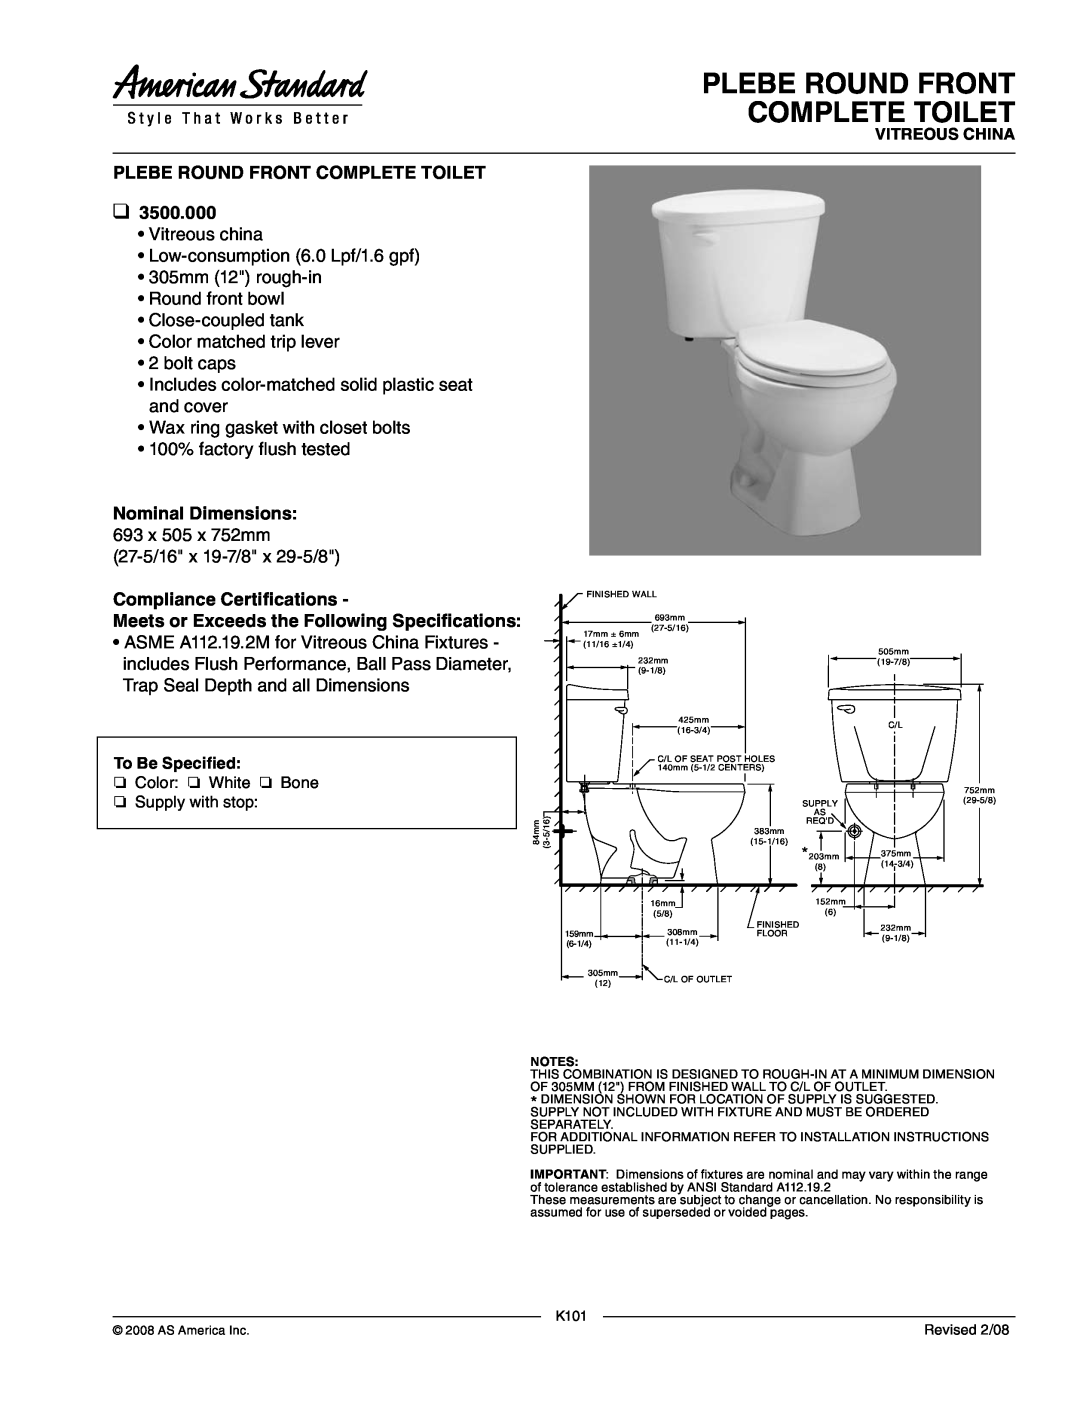 American Standard 3500.000 dimensions PLEBE ROUND FRONT COMPLETE Toilet, Plebe Round Front Complete Toilet, bolt caps 